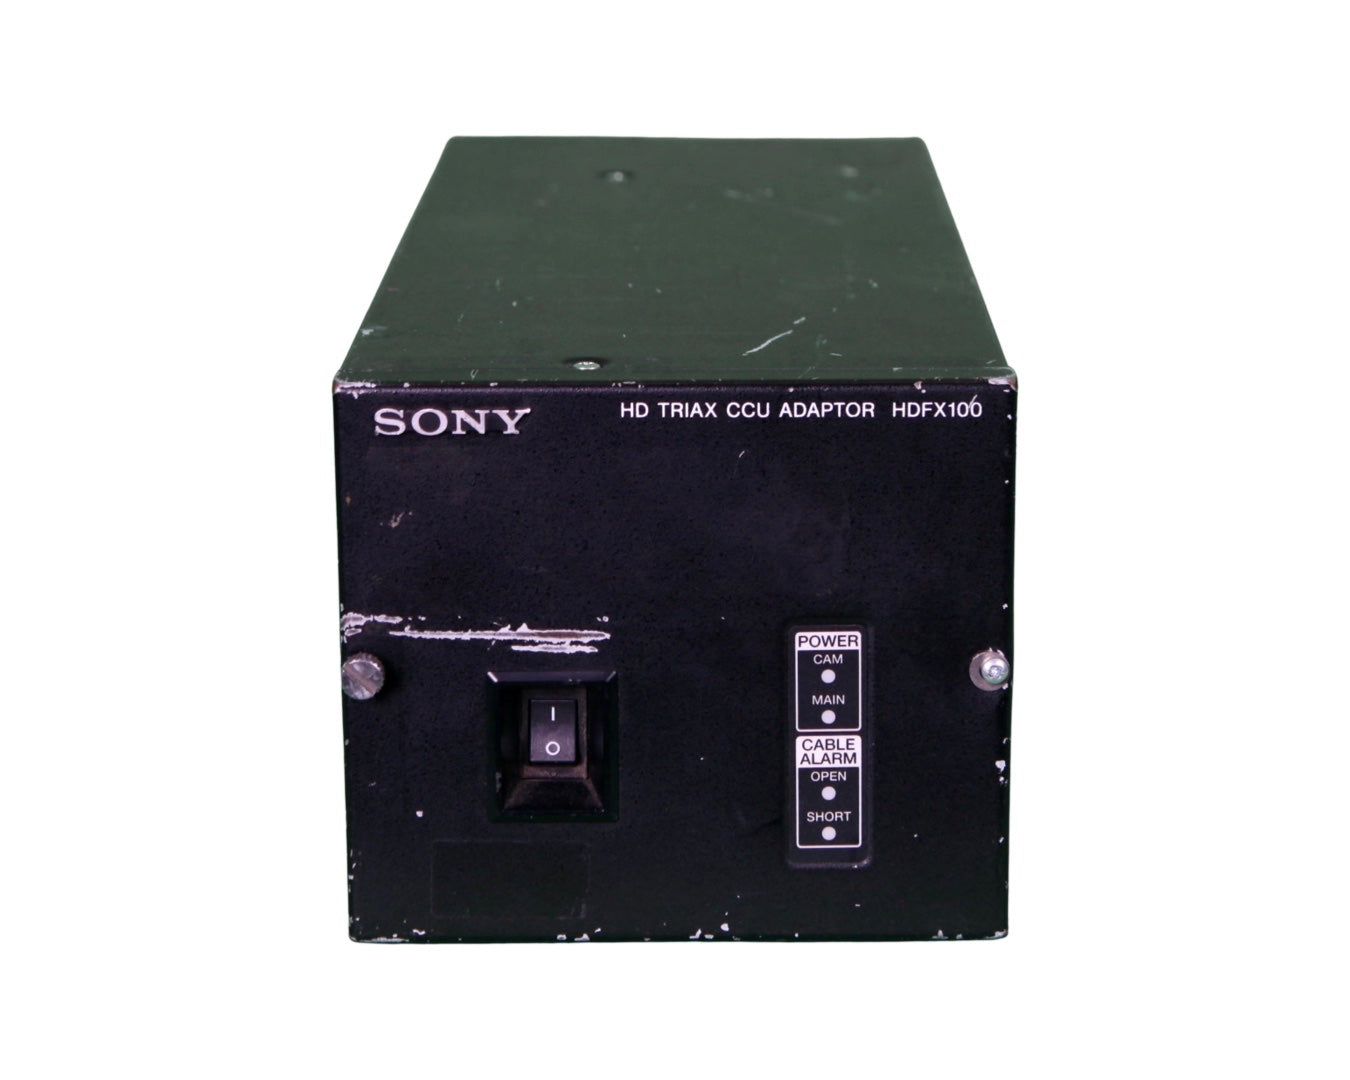 Sony HDFX-200 and HDFX-100 set